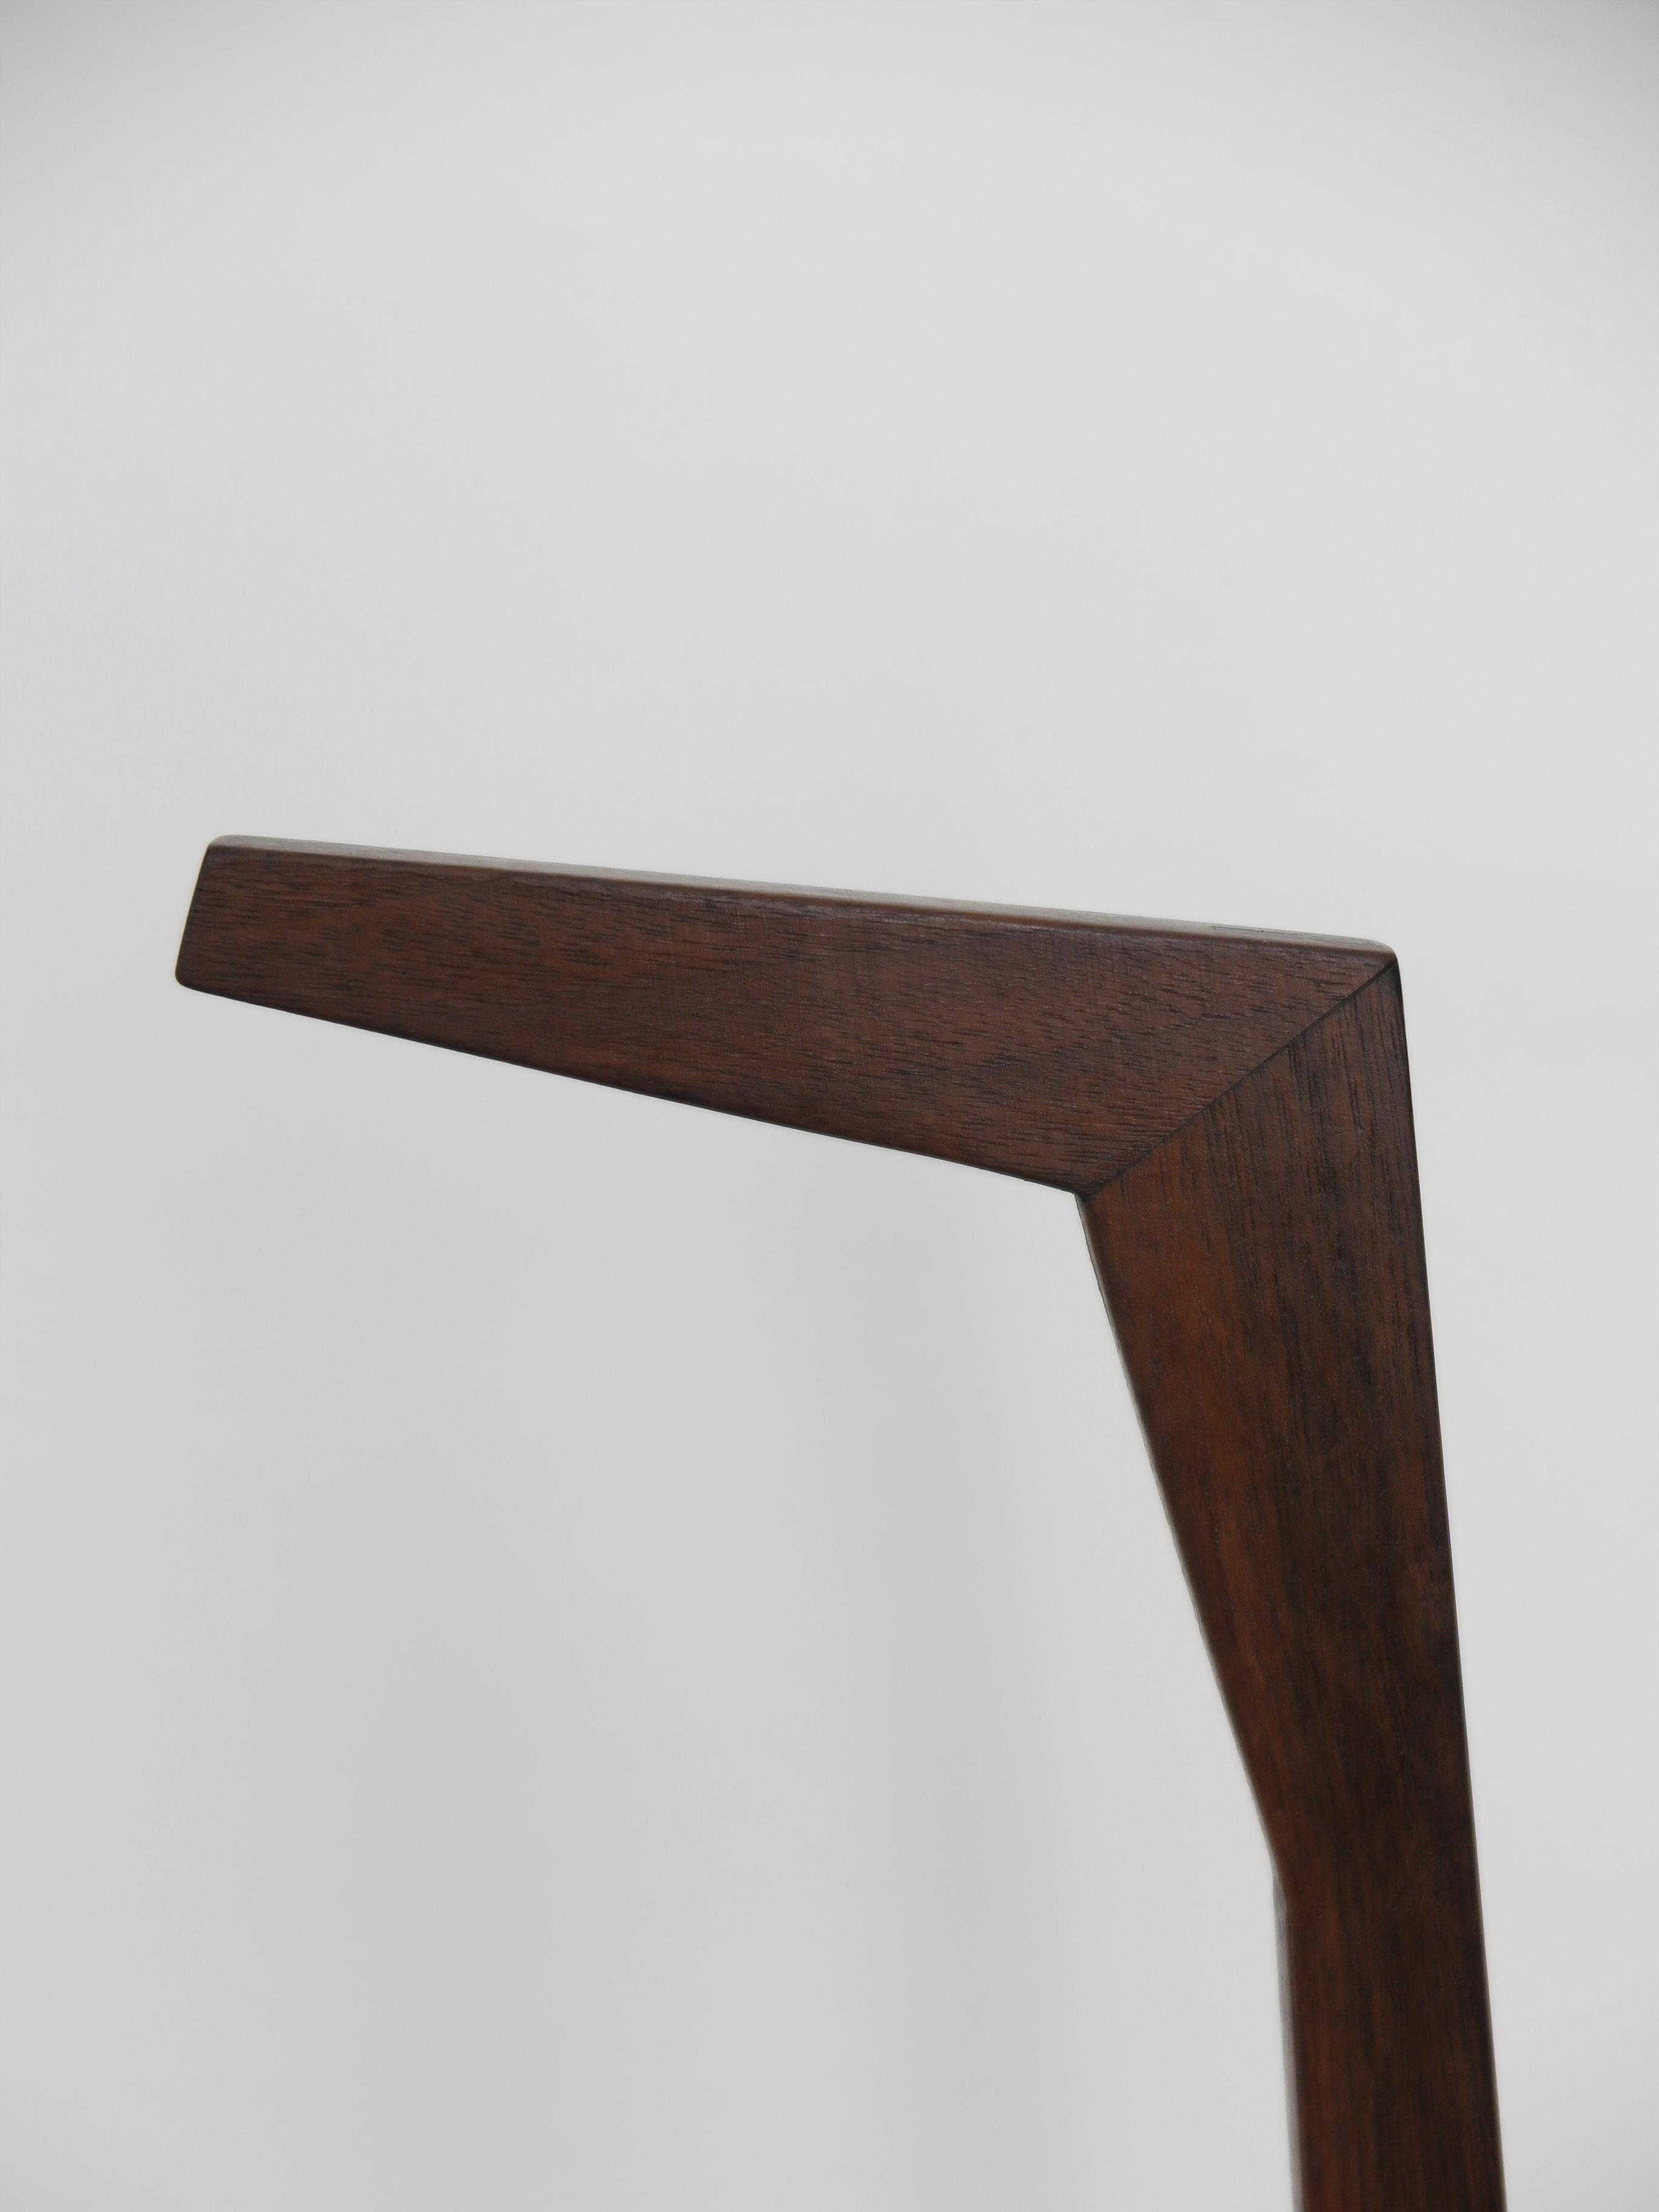 Franco Albini for Poggi Italian Cicognino Dark Wood Side Table 1950s 6